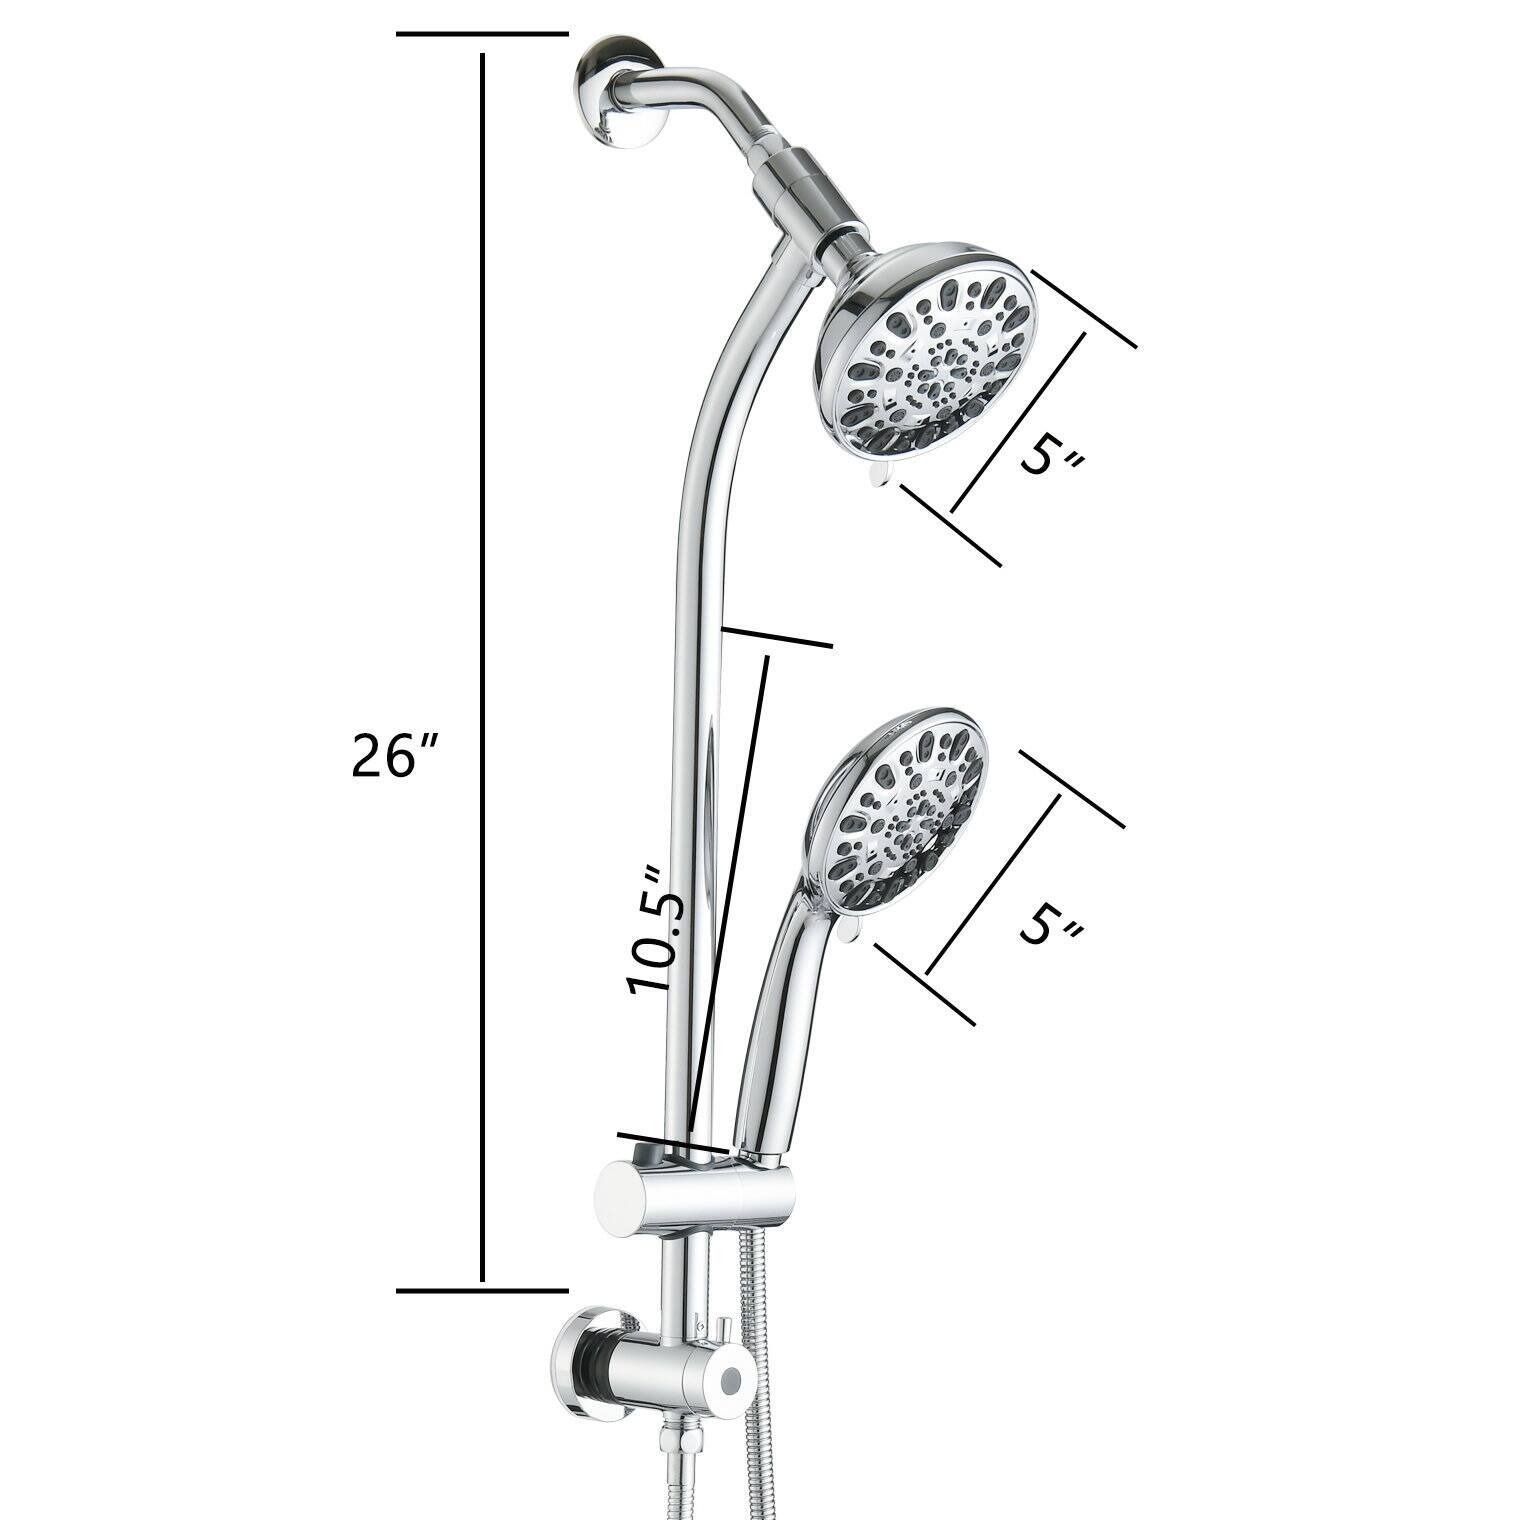 Vanityfair 7-setting Rain Shower Head 26-inch Stainless Steel Slide Bar Combo, Dual Shower Head Spa System